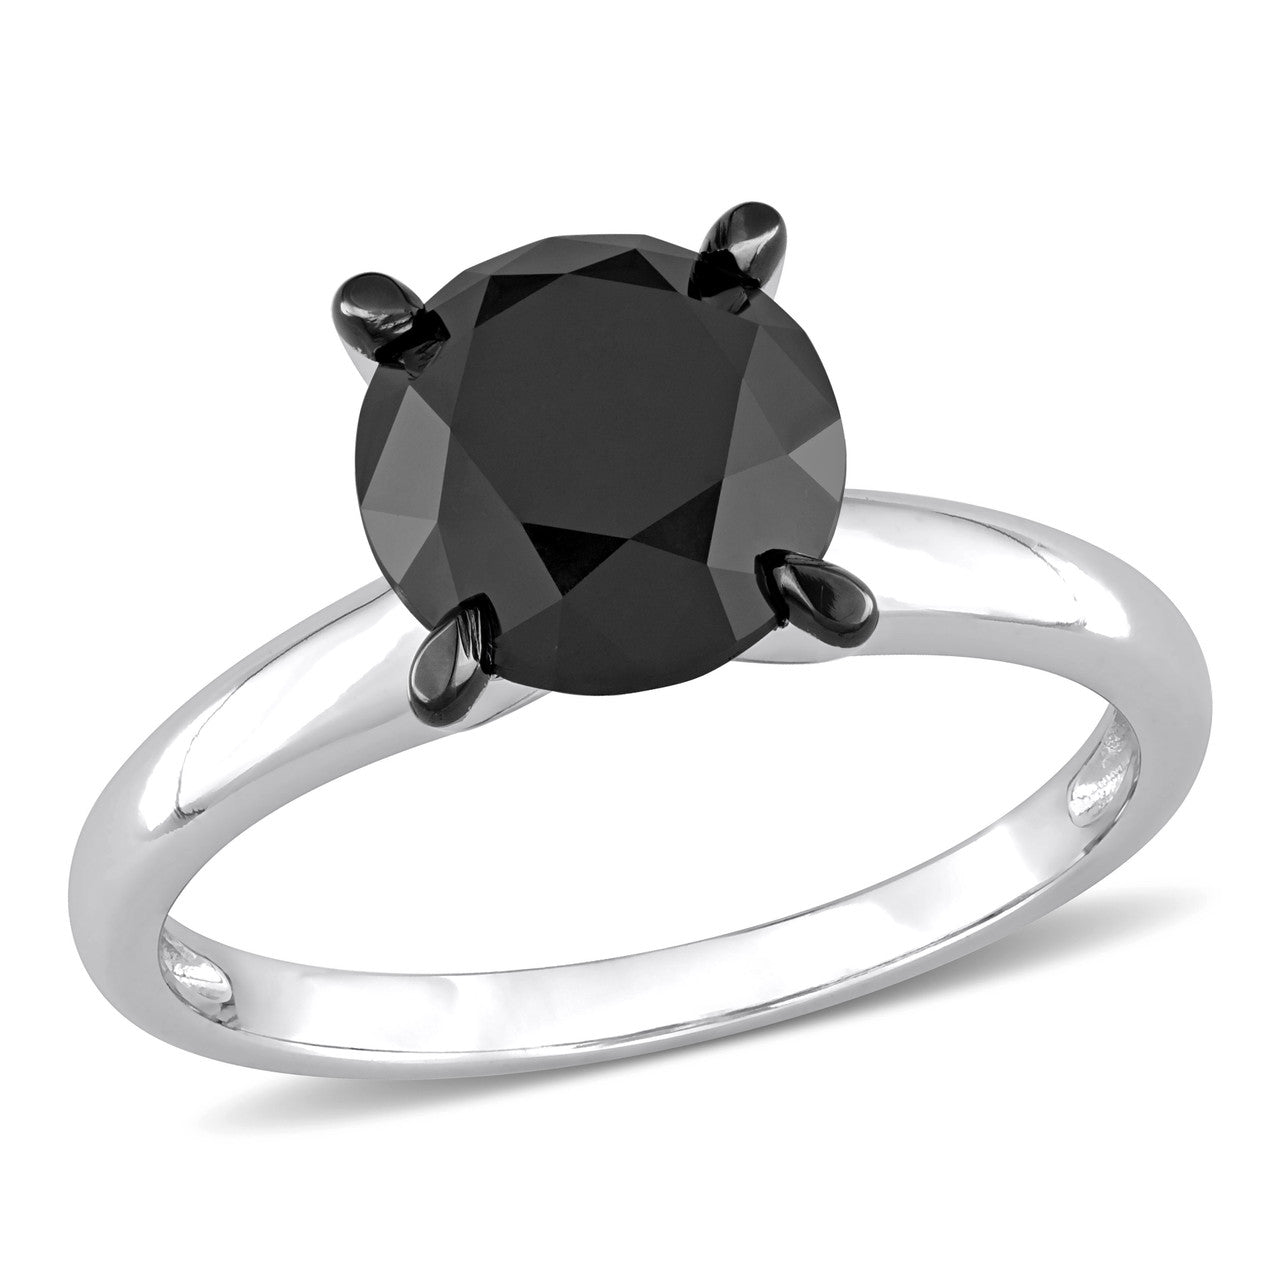 Ice Jewellery 3 CT Black Diamond Solitaire Ring in 14k White Gold w/ Black Rhodium Plated -  75000005567 | Ice Jewellery Australia